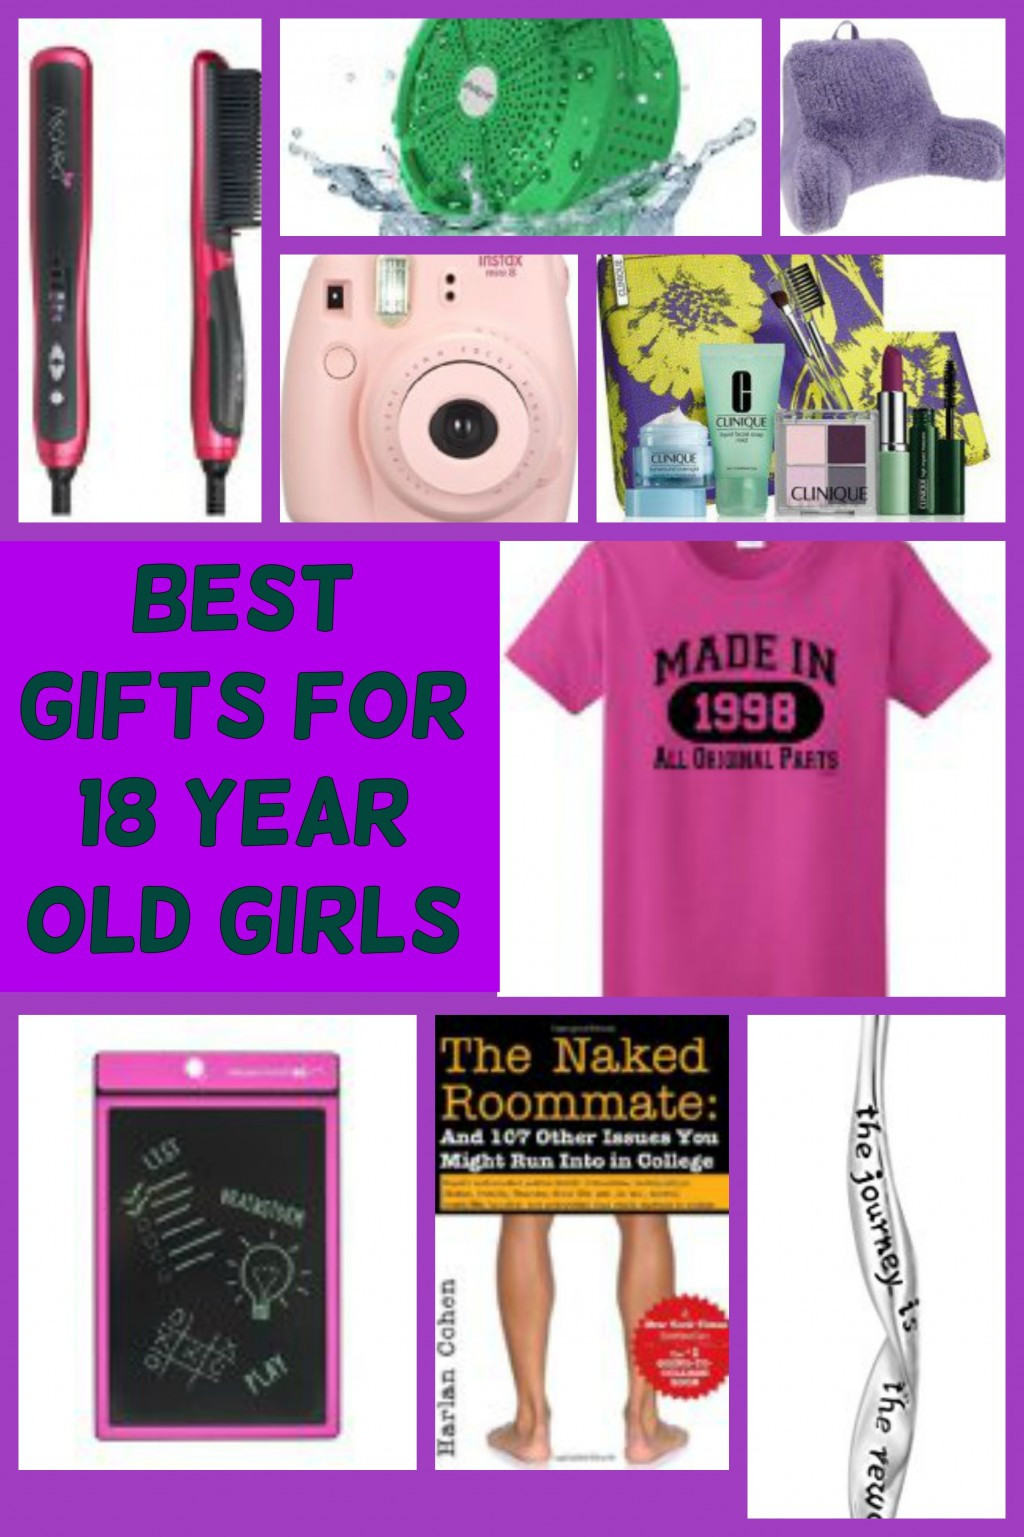 Gift Ideas For 14 Year Old Girls
 Popular Birthday and Christmas Gift Ideas for 18 Year Old